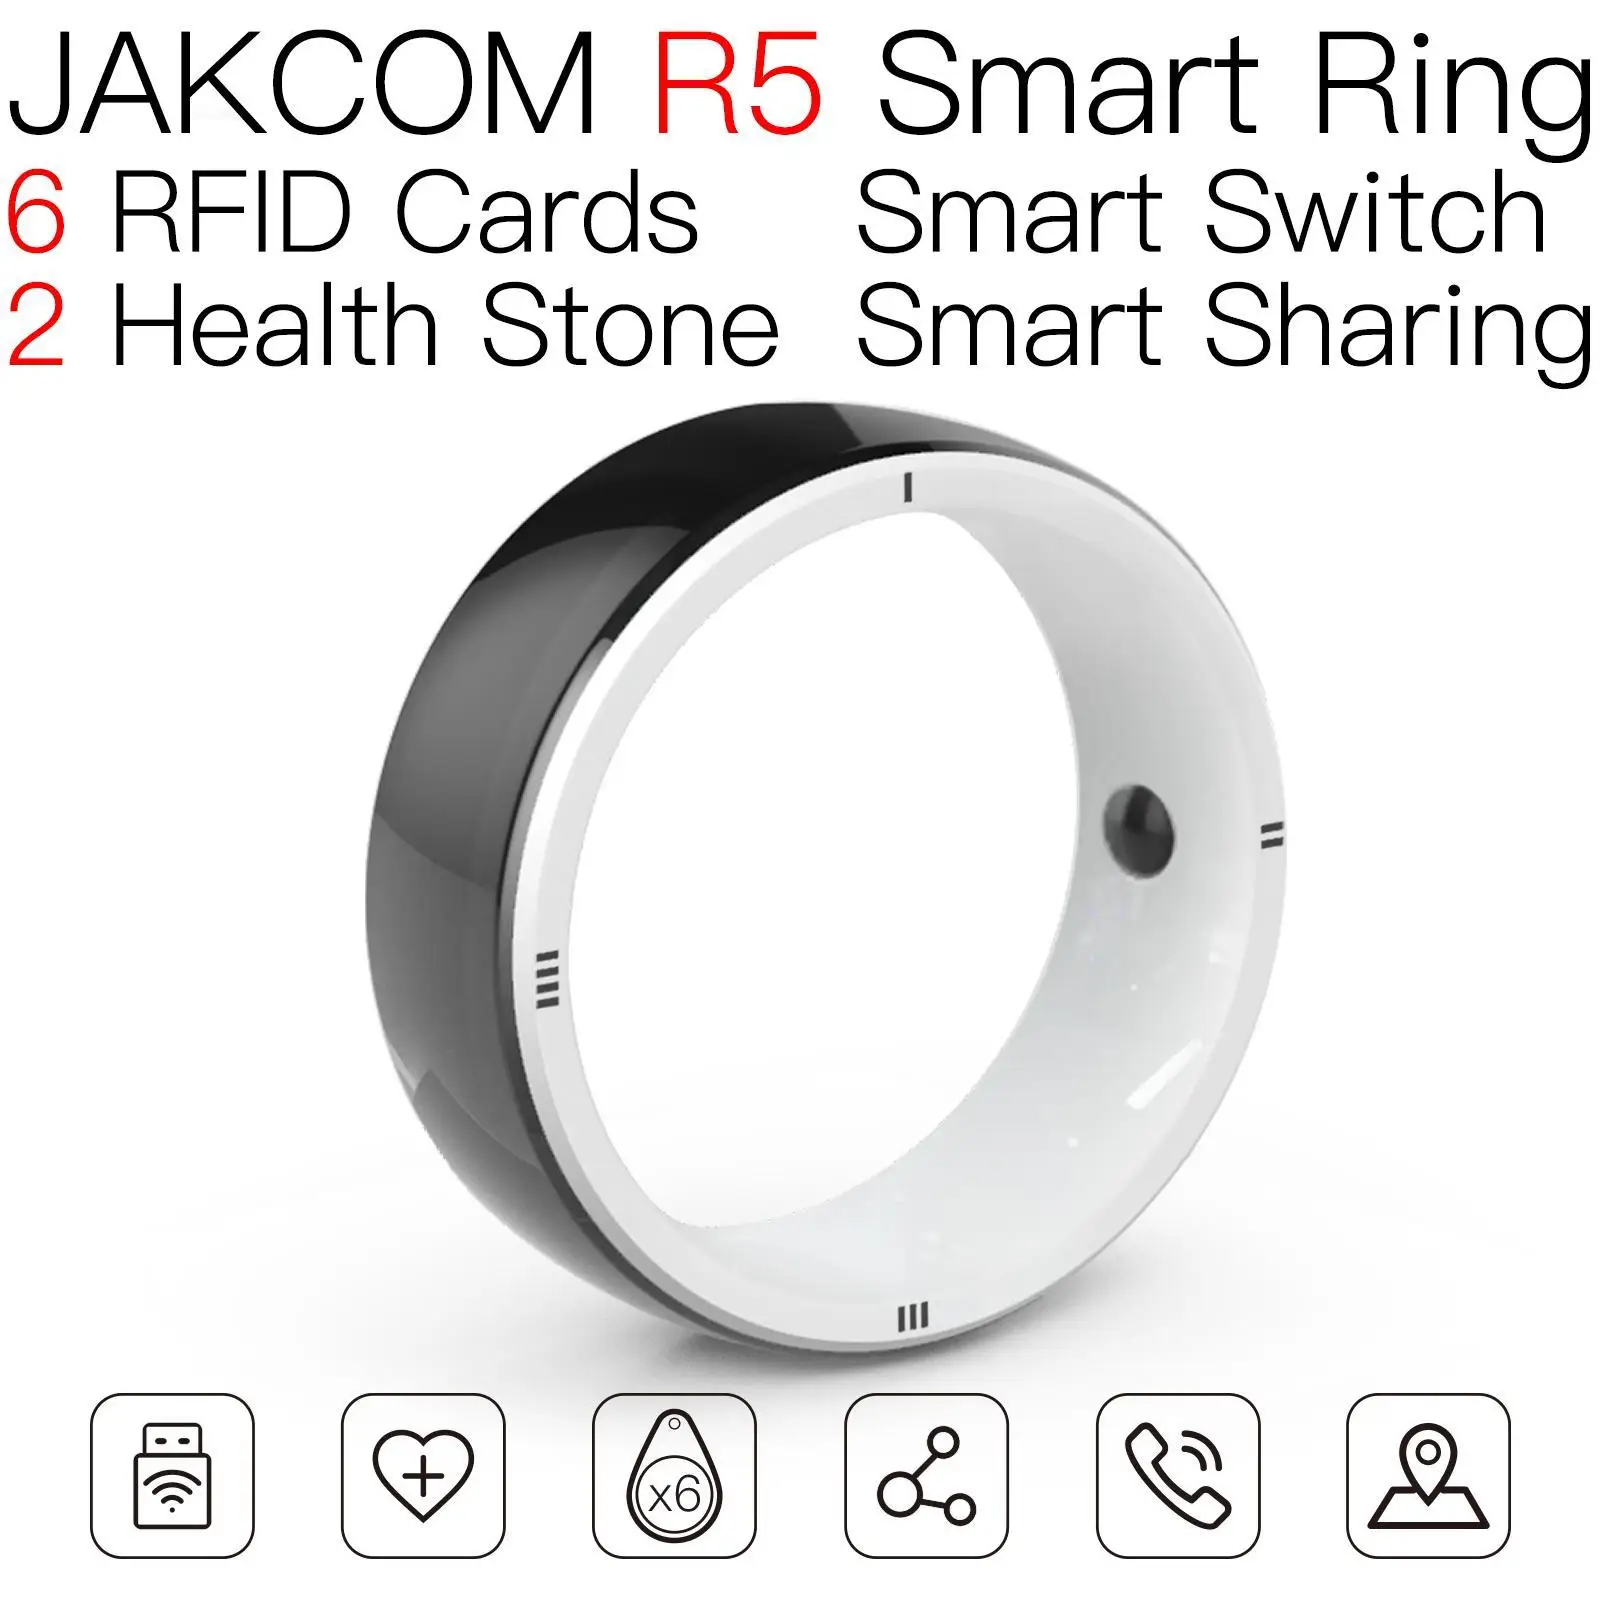 

JAKCOM R5 Smart Ring better than coin rfid carte drago mentalis magic tag wifi nfc uhf hf reader new users bonus 2 rupee items